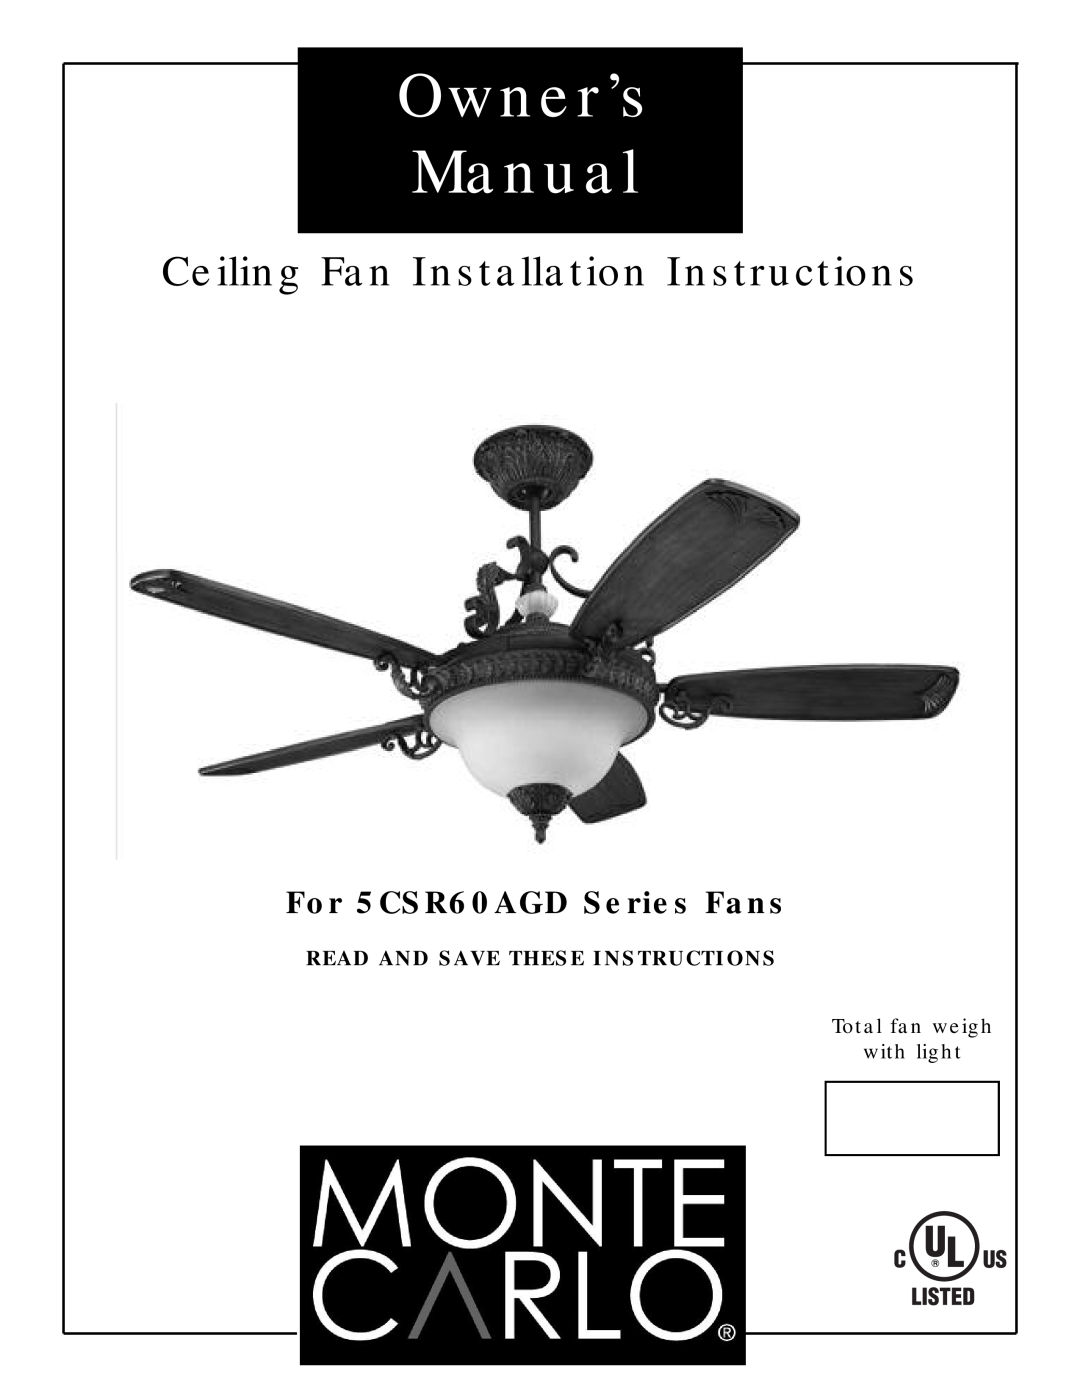 Monte Carlo Fan Company owner manual For 5CSR60AGD Series Fans, Ceiling Fan Installation Instructions 